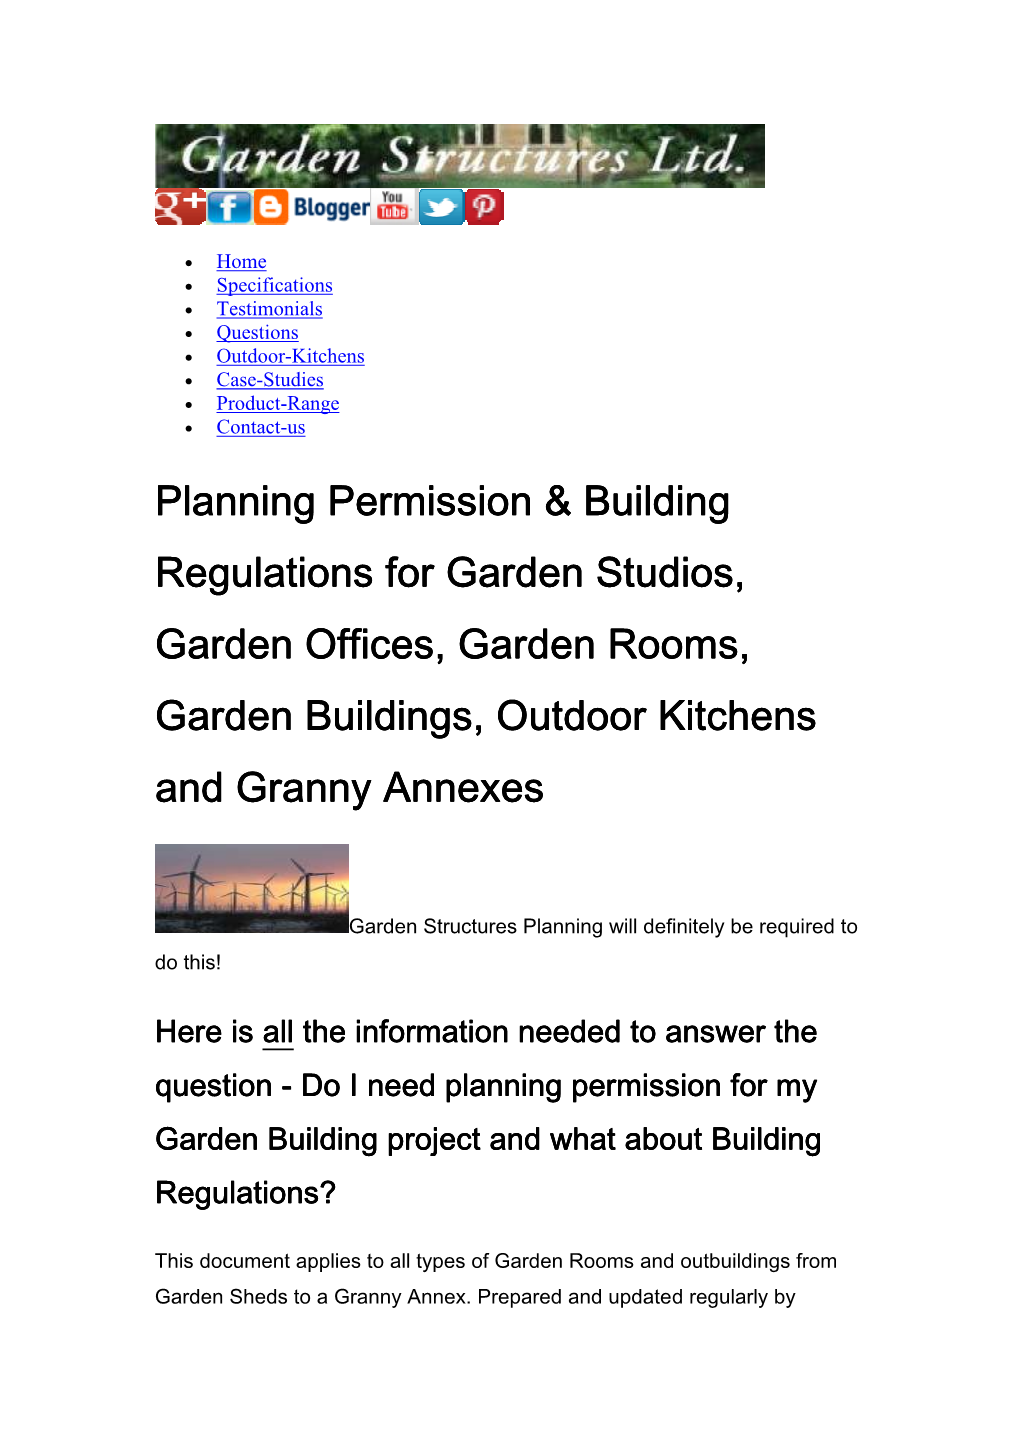 Planning Permission & Building Regulations for Garden Studios